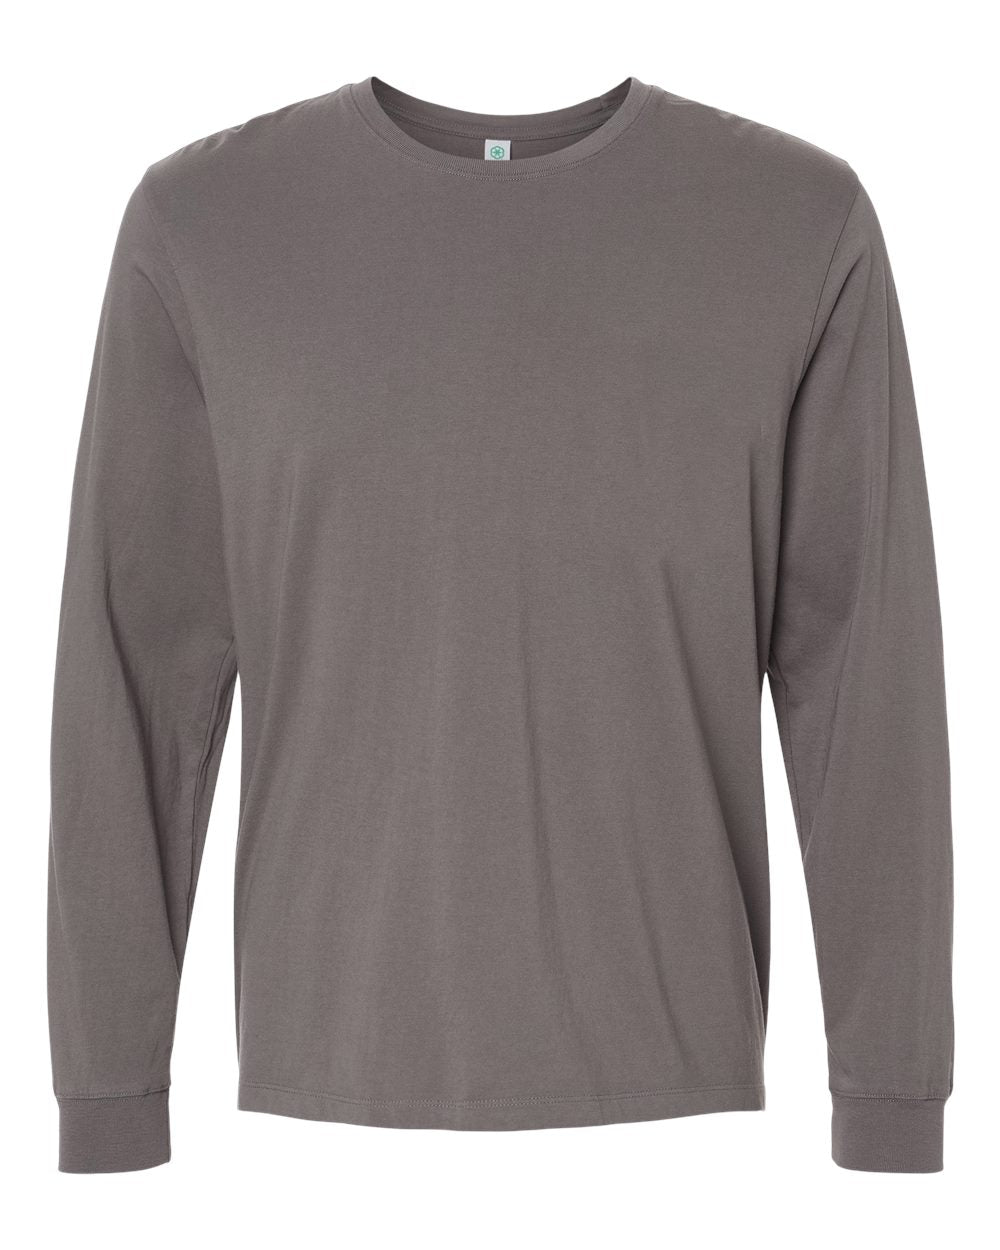 Softshirts® Unisex Organic Cotton Long-Sleeve Shirt in gray